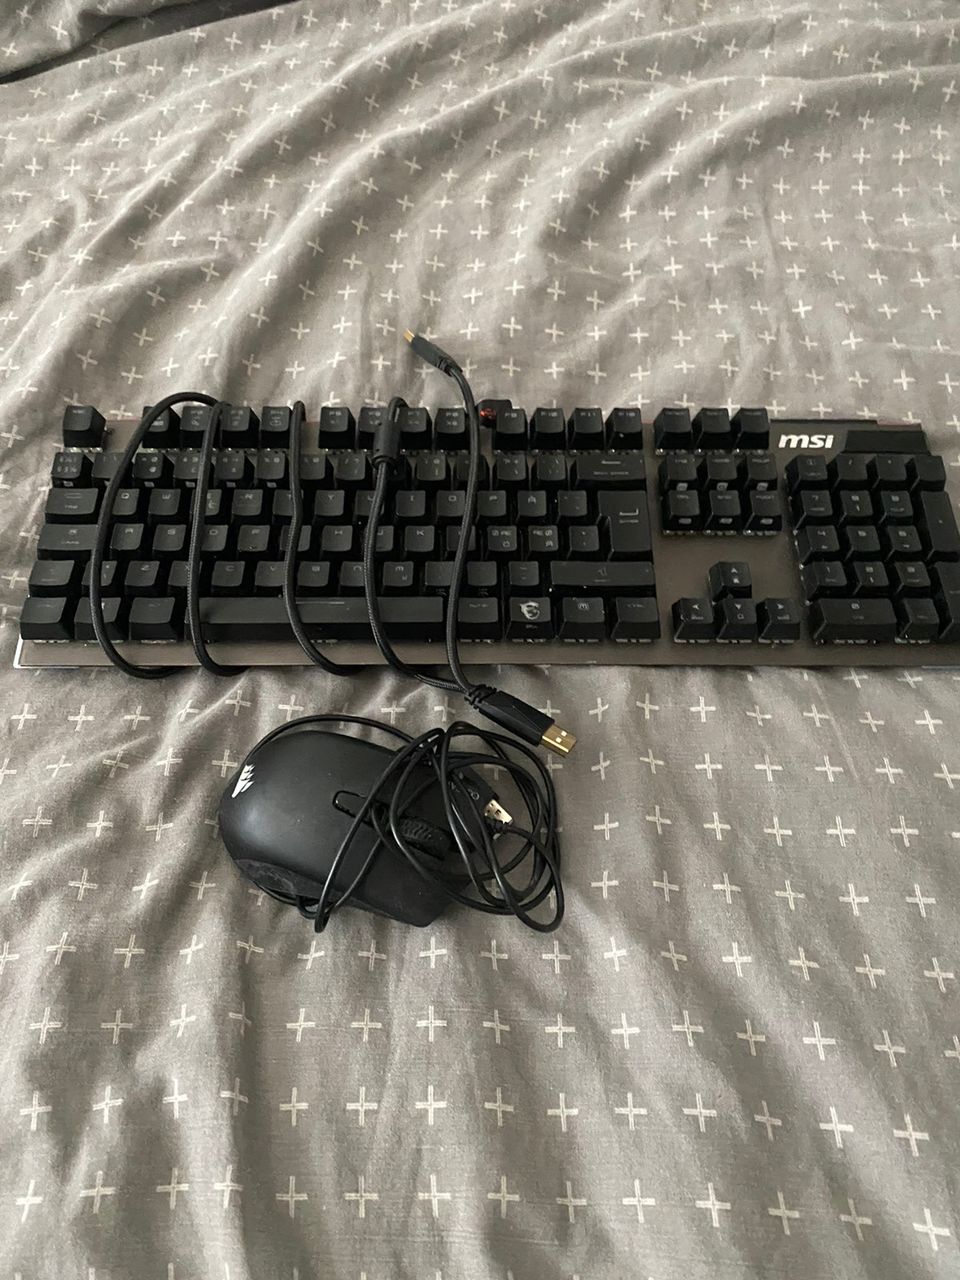 Corsair hiiri ja msi vigor gk80 keyboard